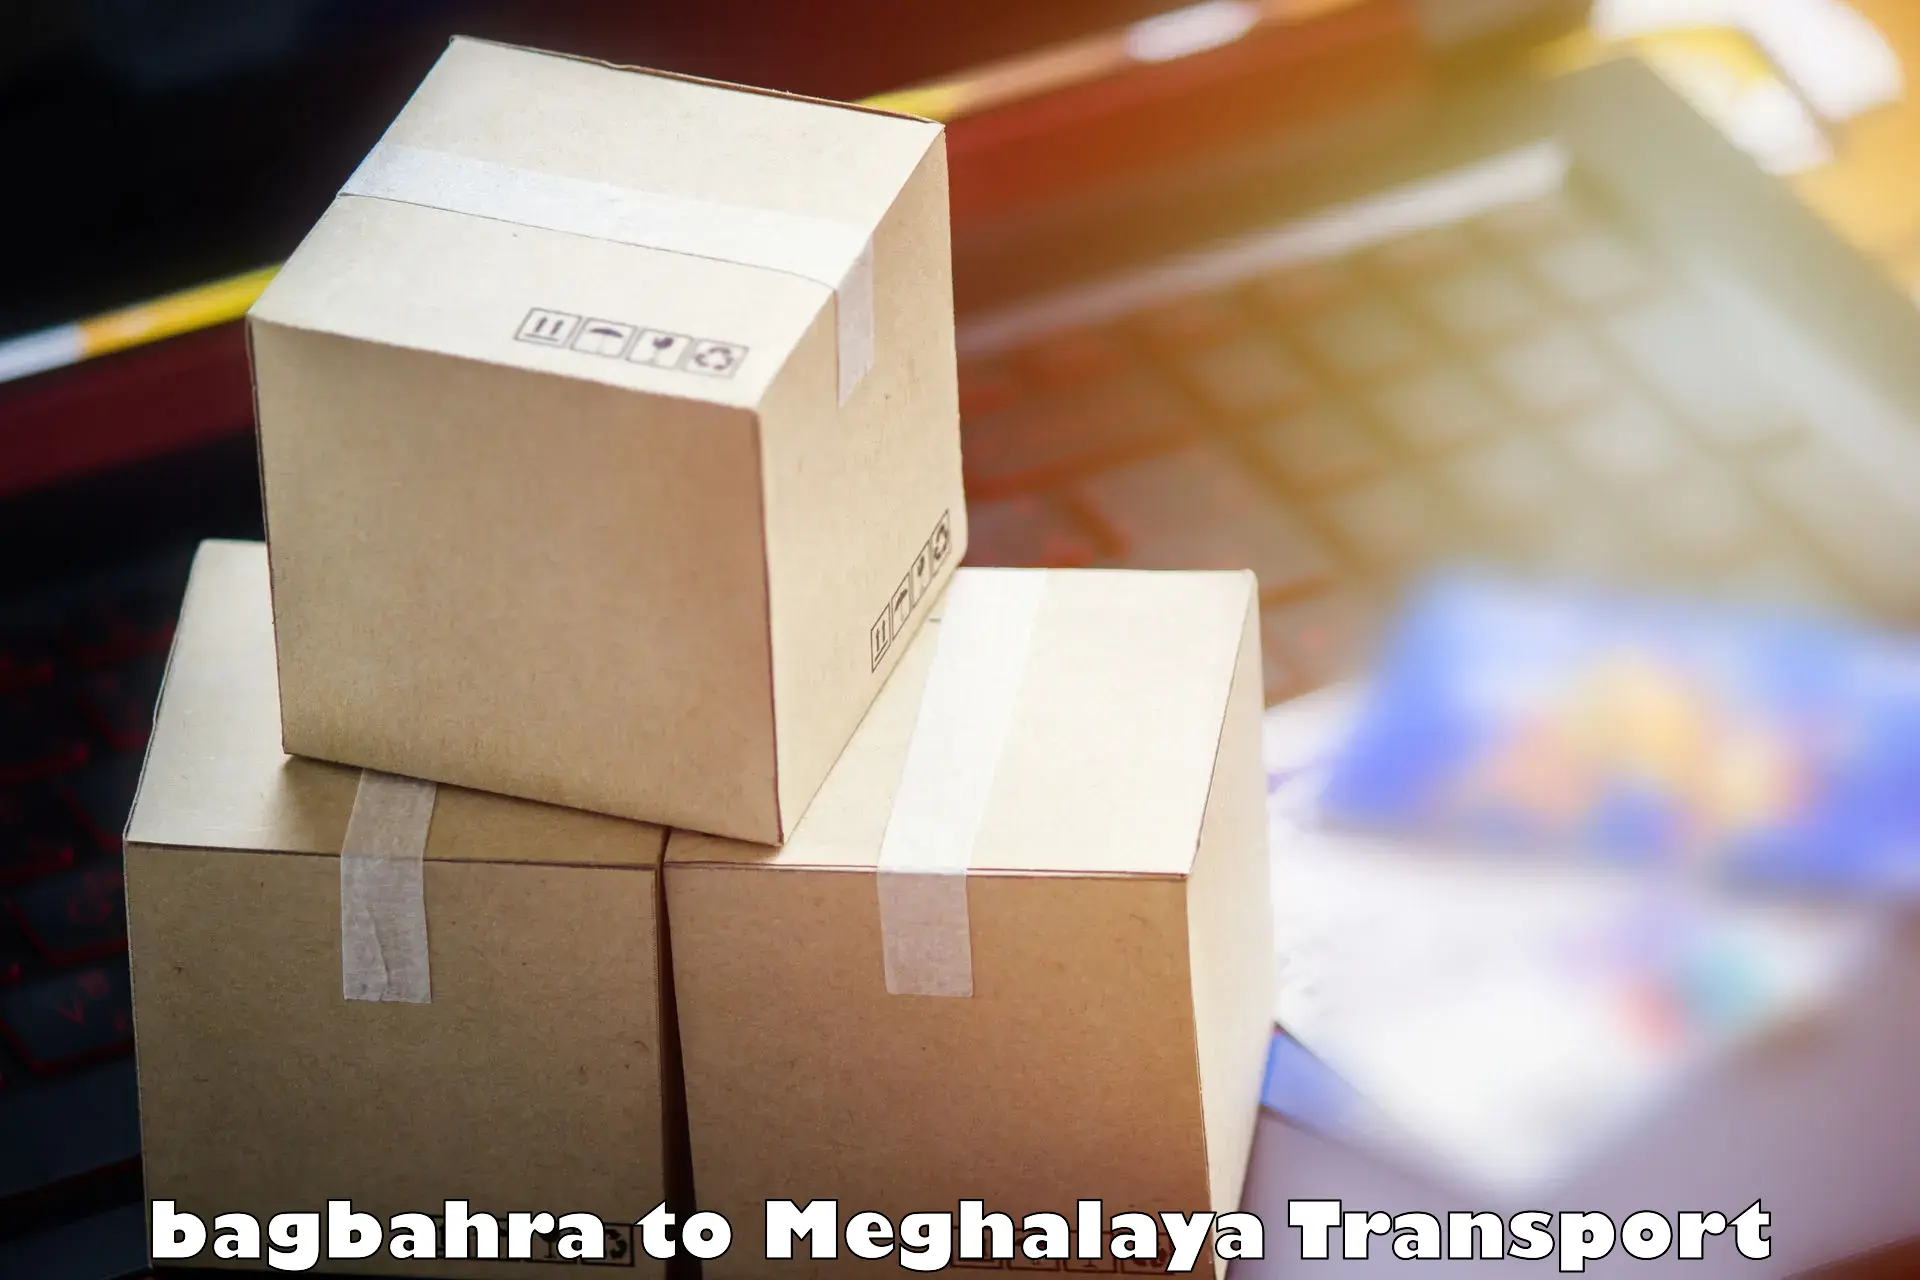 Lorry transport service bagbahra to Cherrapunji